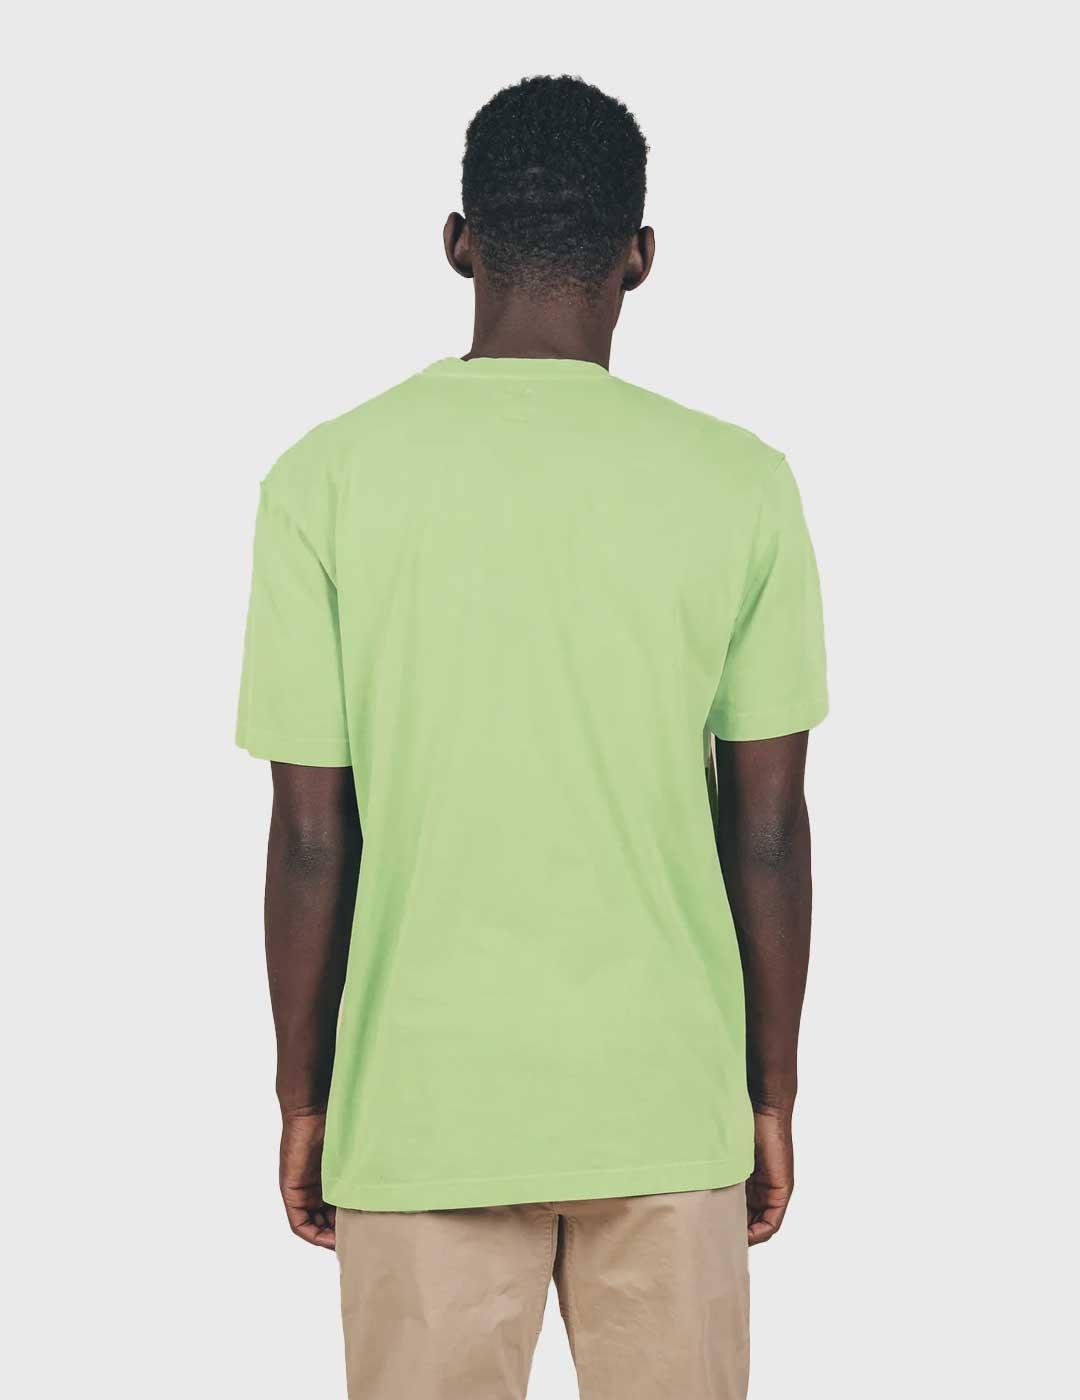 Trendsplant Garza T-Shirt Camiseta verde para hombre